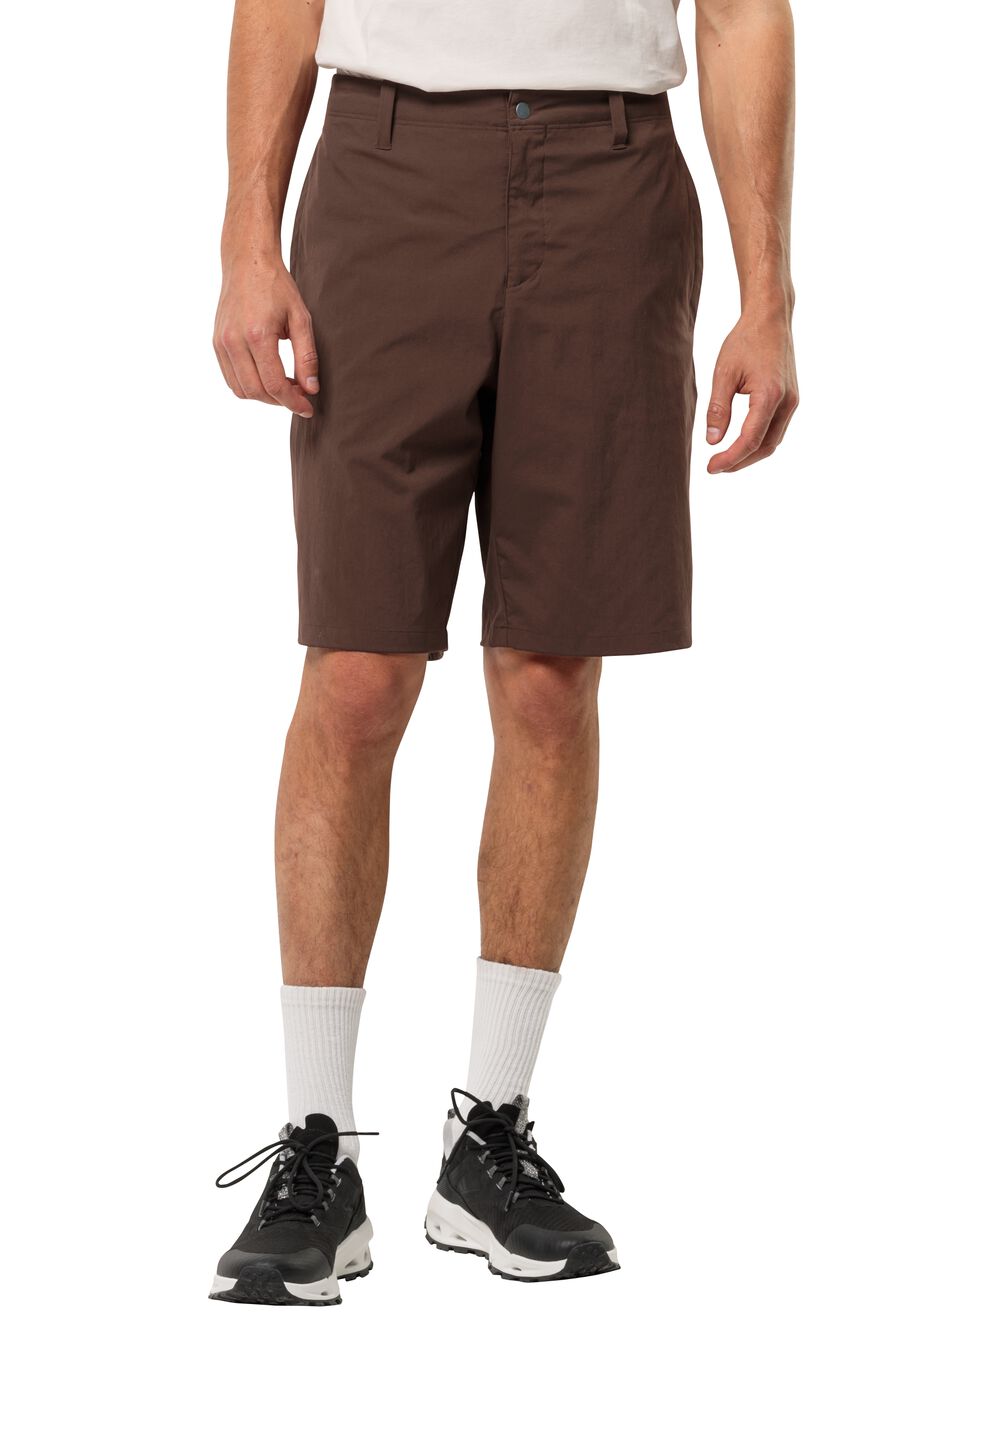 Jack Wolfskin Desert Shorts Men Korte broek Heren 56 bruin dark mahogany